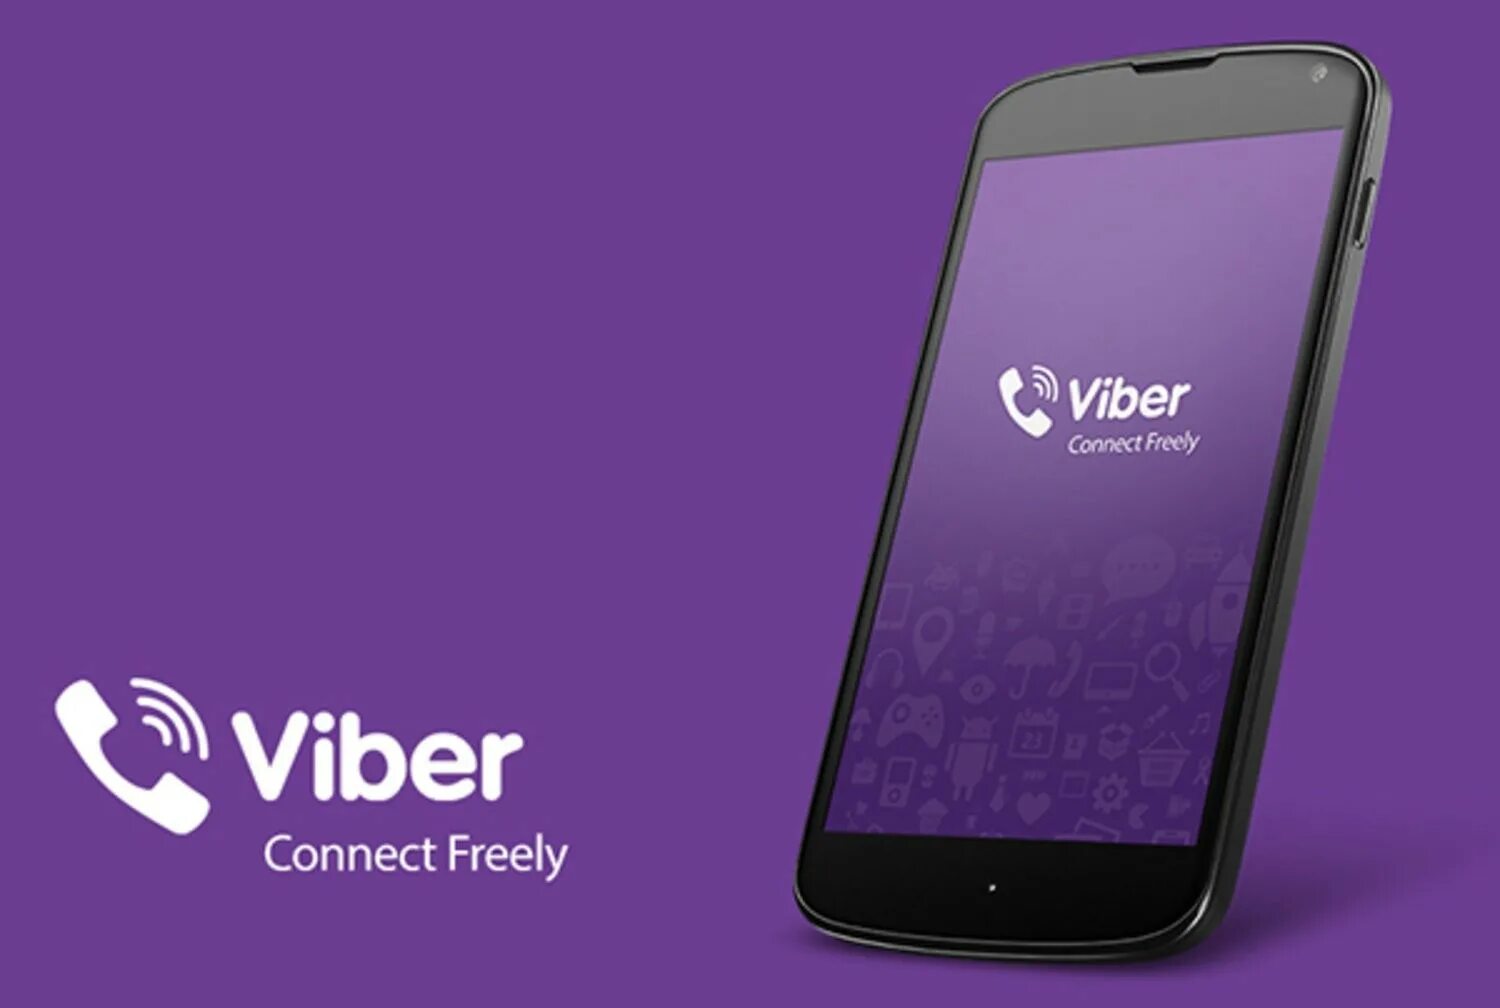 Viber 15. Вайбер. Фото на вайбер. Viber фото. Фото для вайбера.